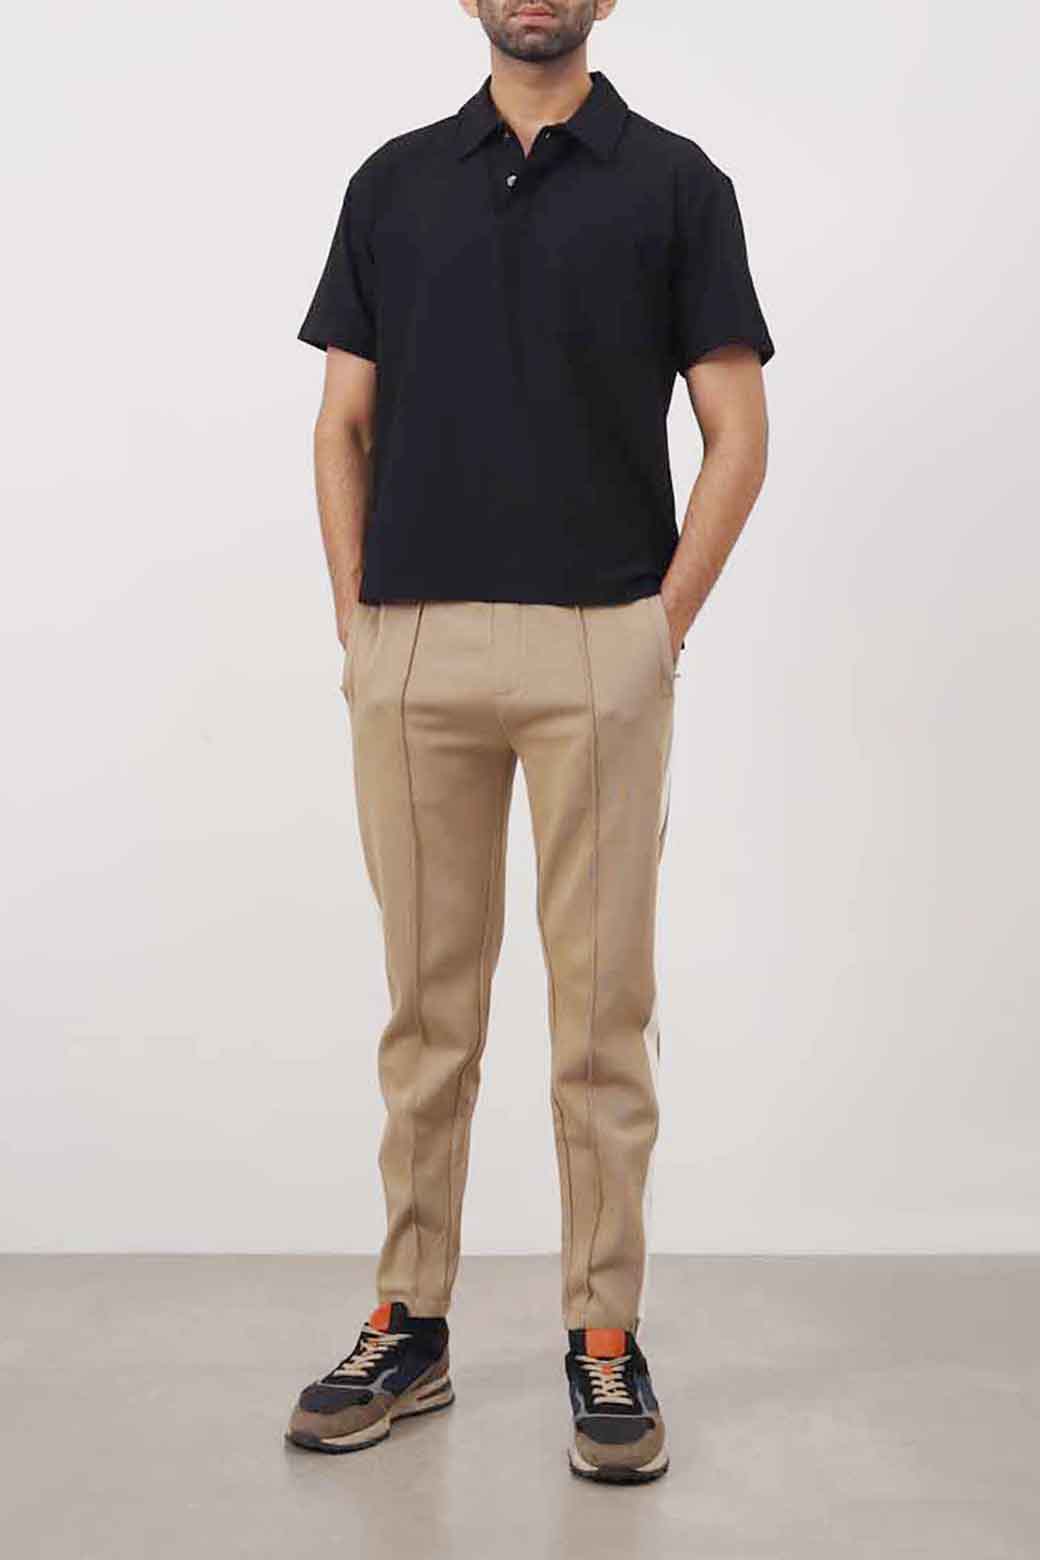 THOMAS SCOTT Men Solid Casual Green Shirt - Buy THOMAS SCOTT Men Solid  Casual Green Shirt Online at Best Prices in India | Flipkart.com